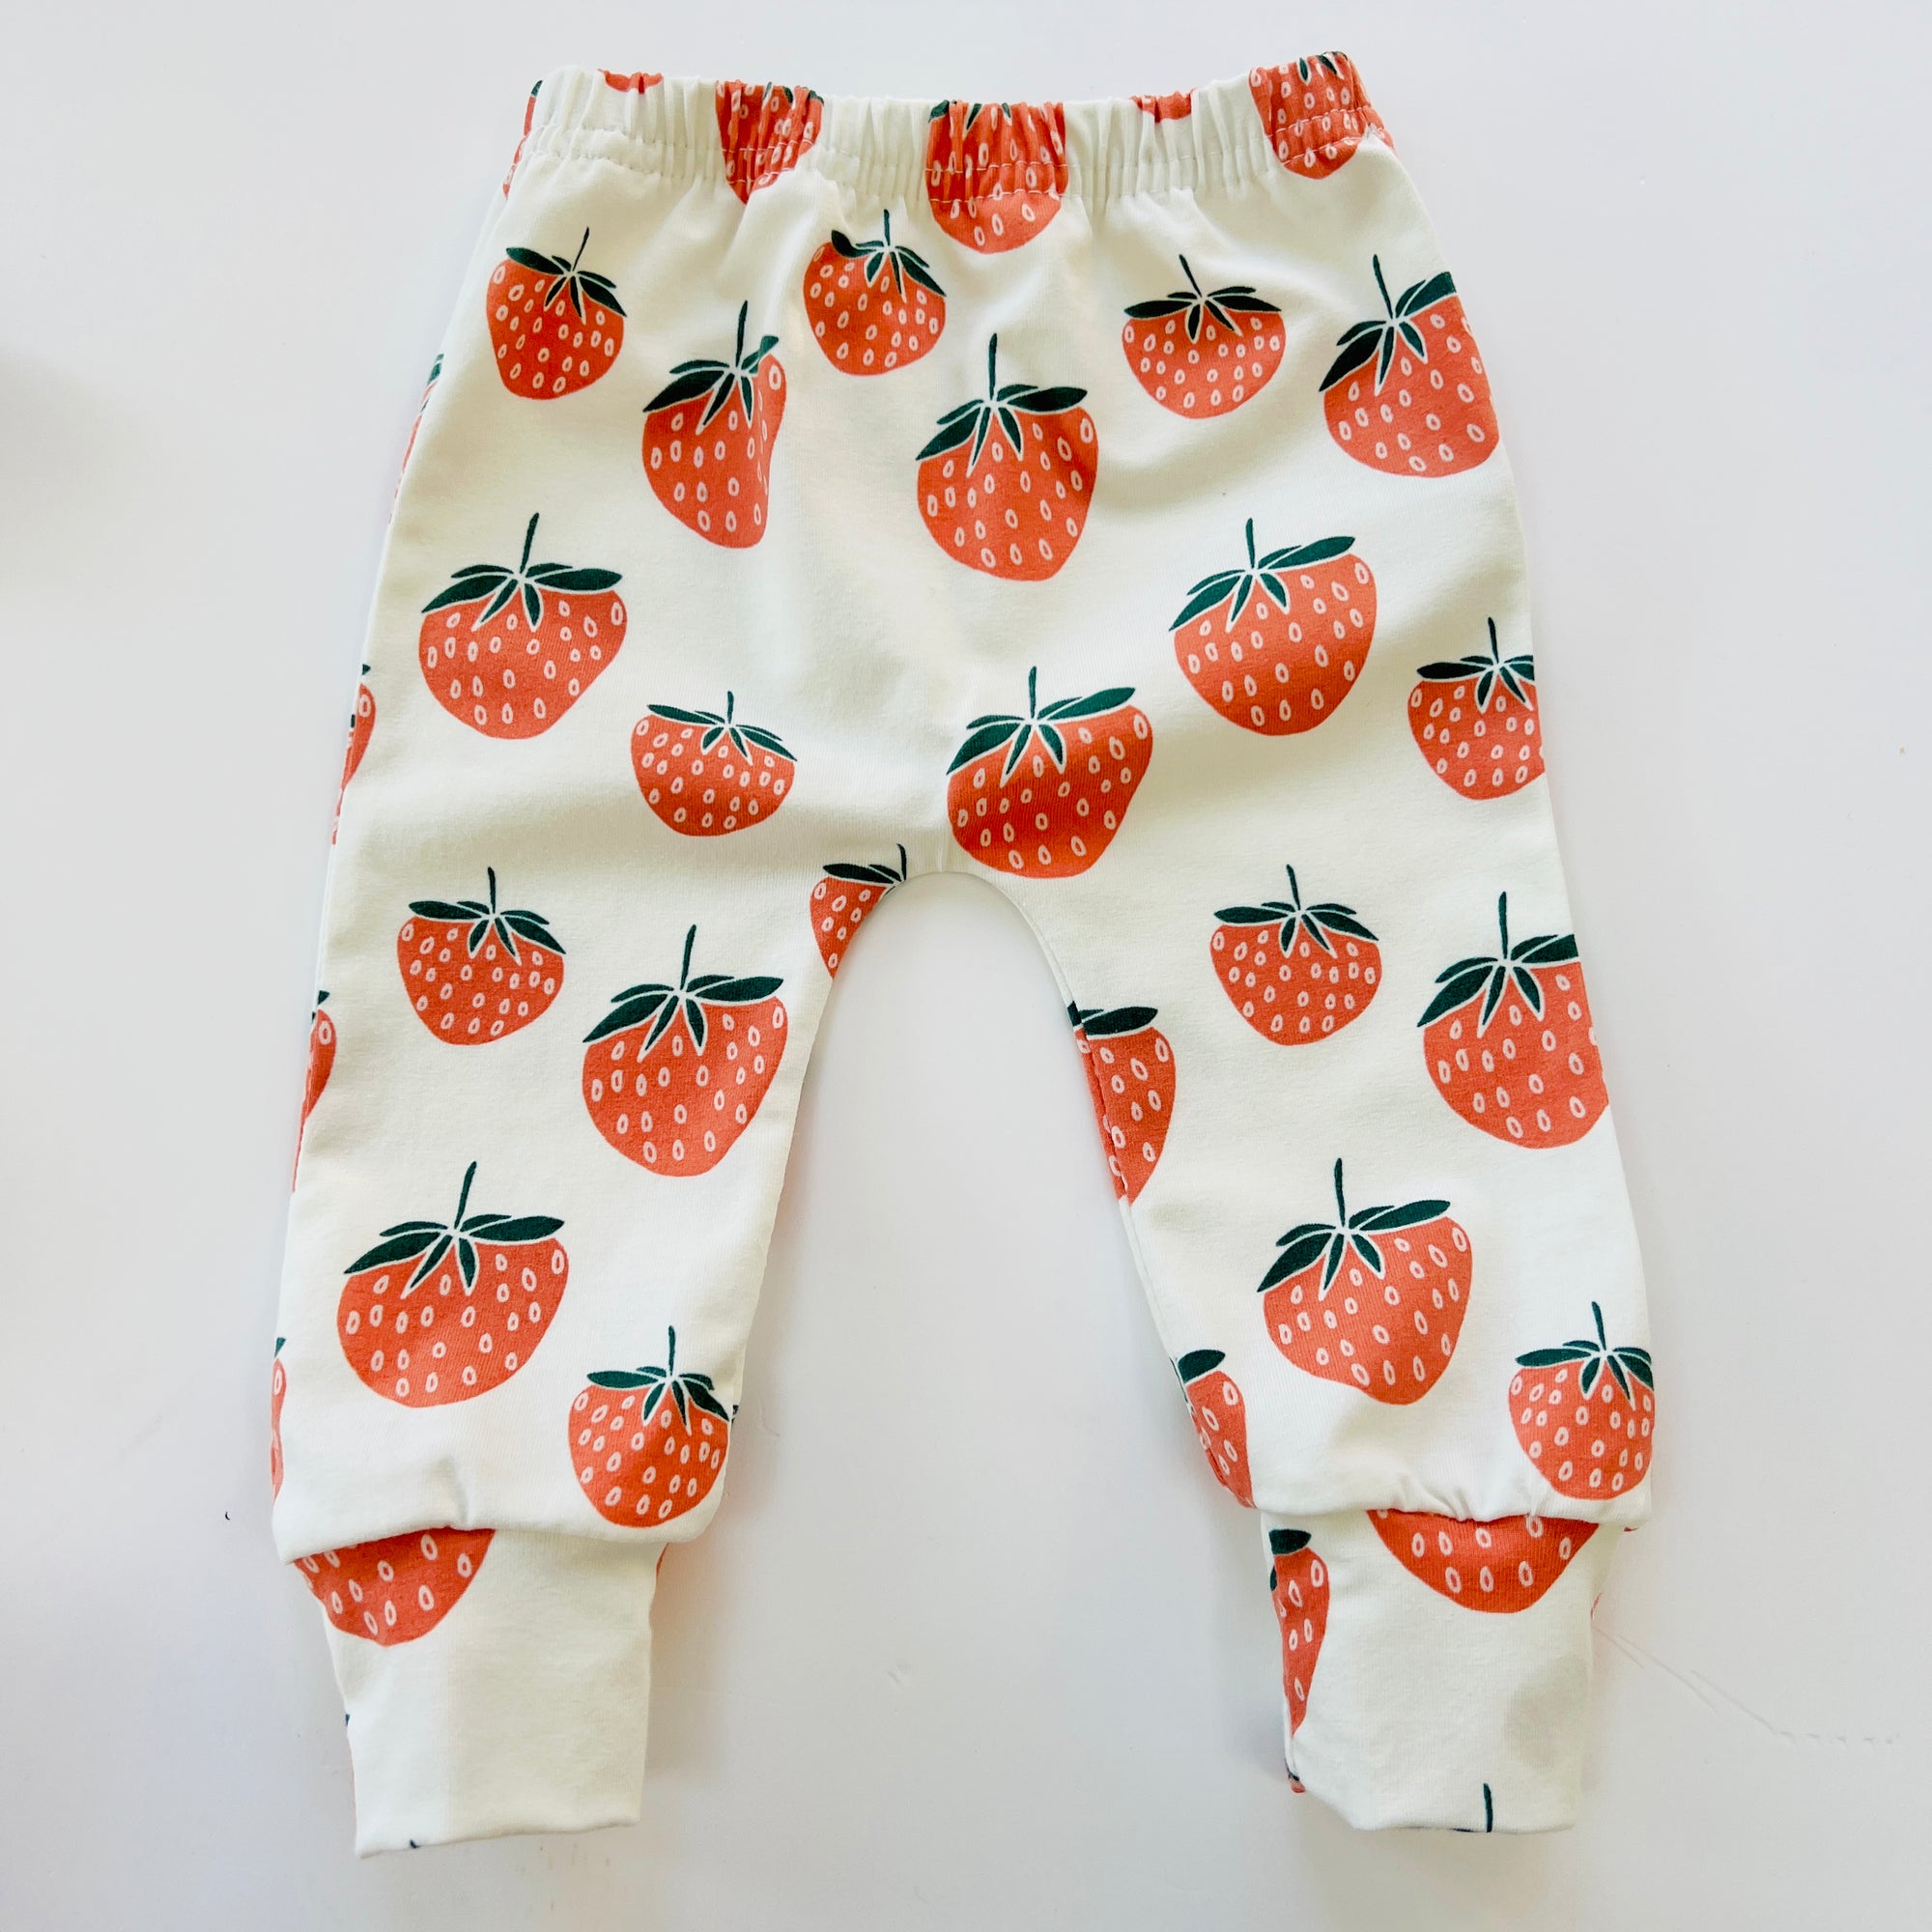 Eddie & Bee organic cotton leggings in Cream "Strawberries" print.